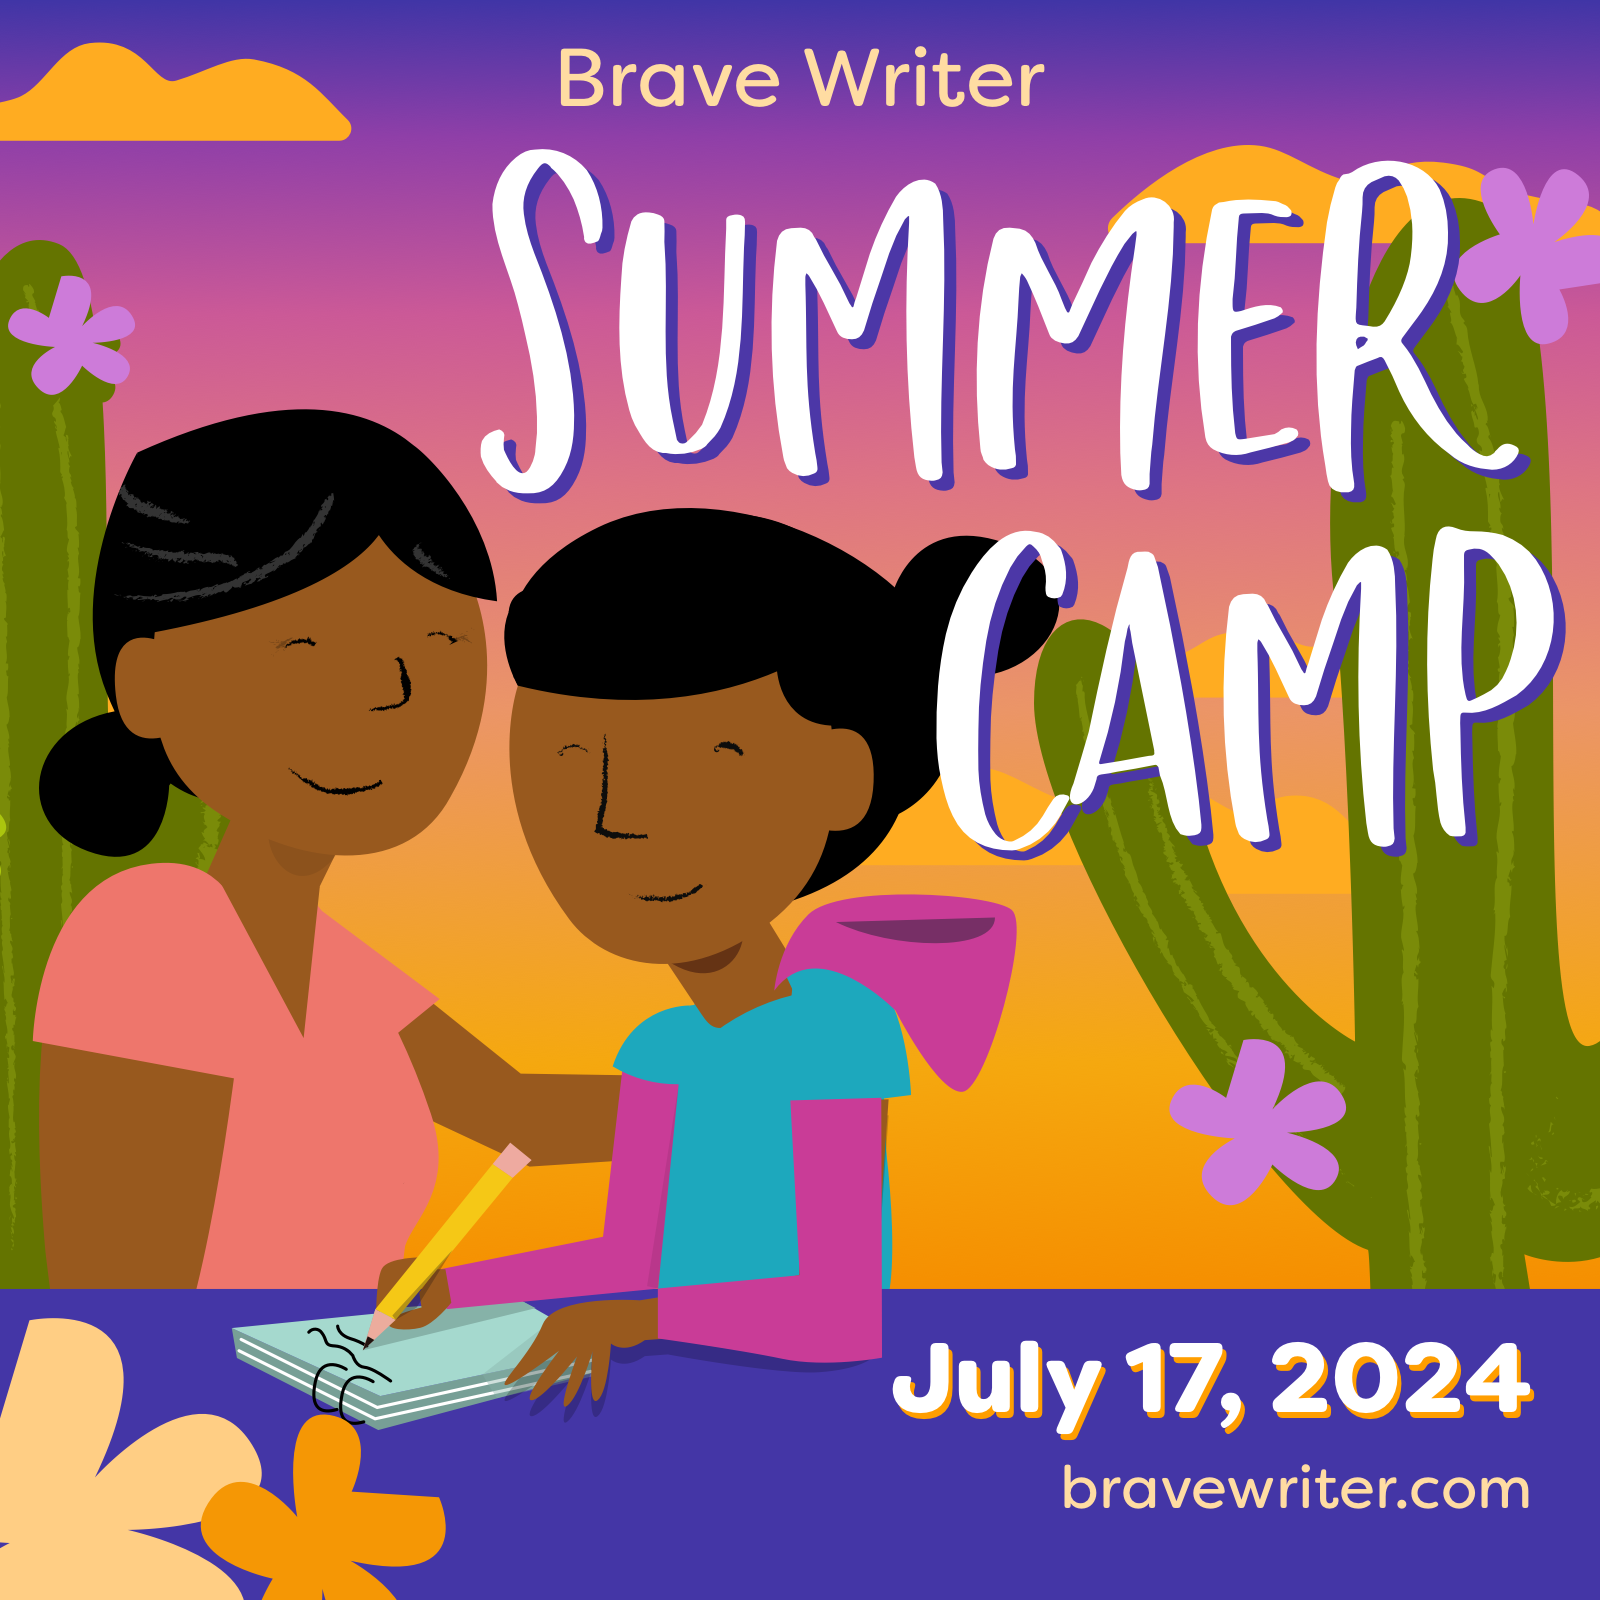 Brave Writer Summer Camp